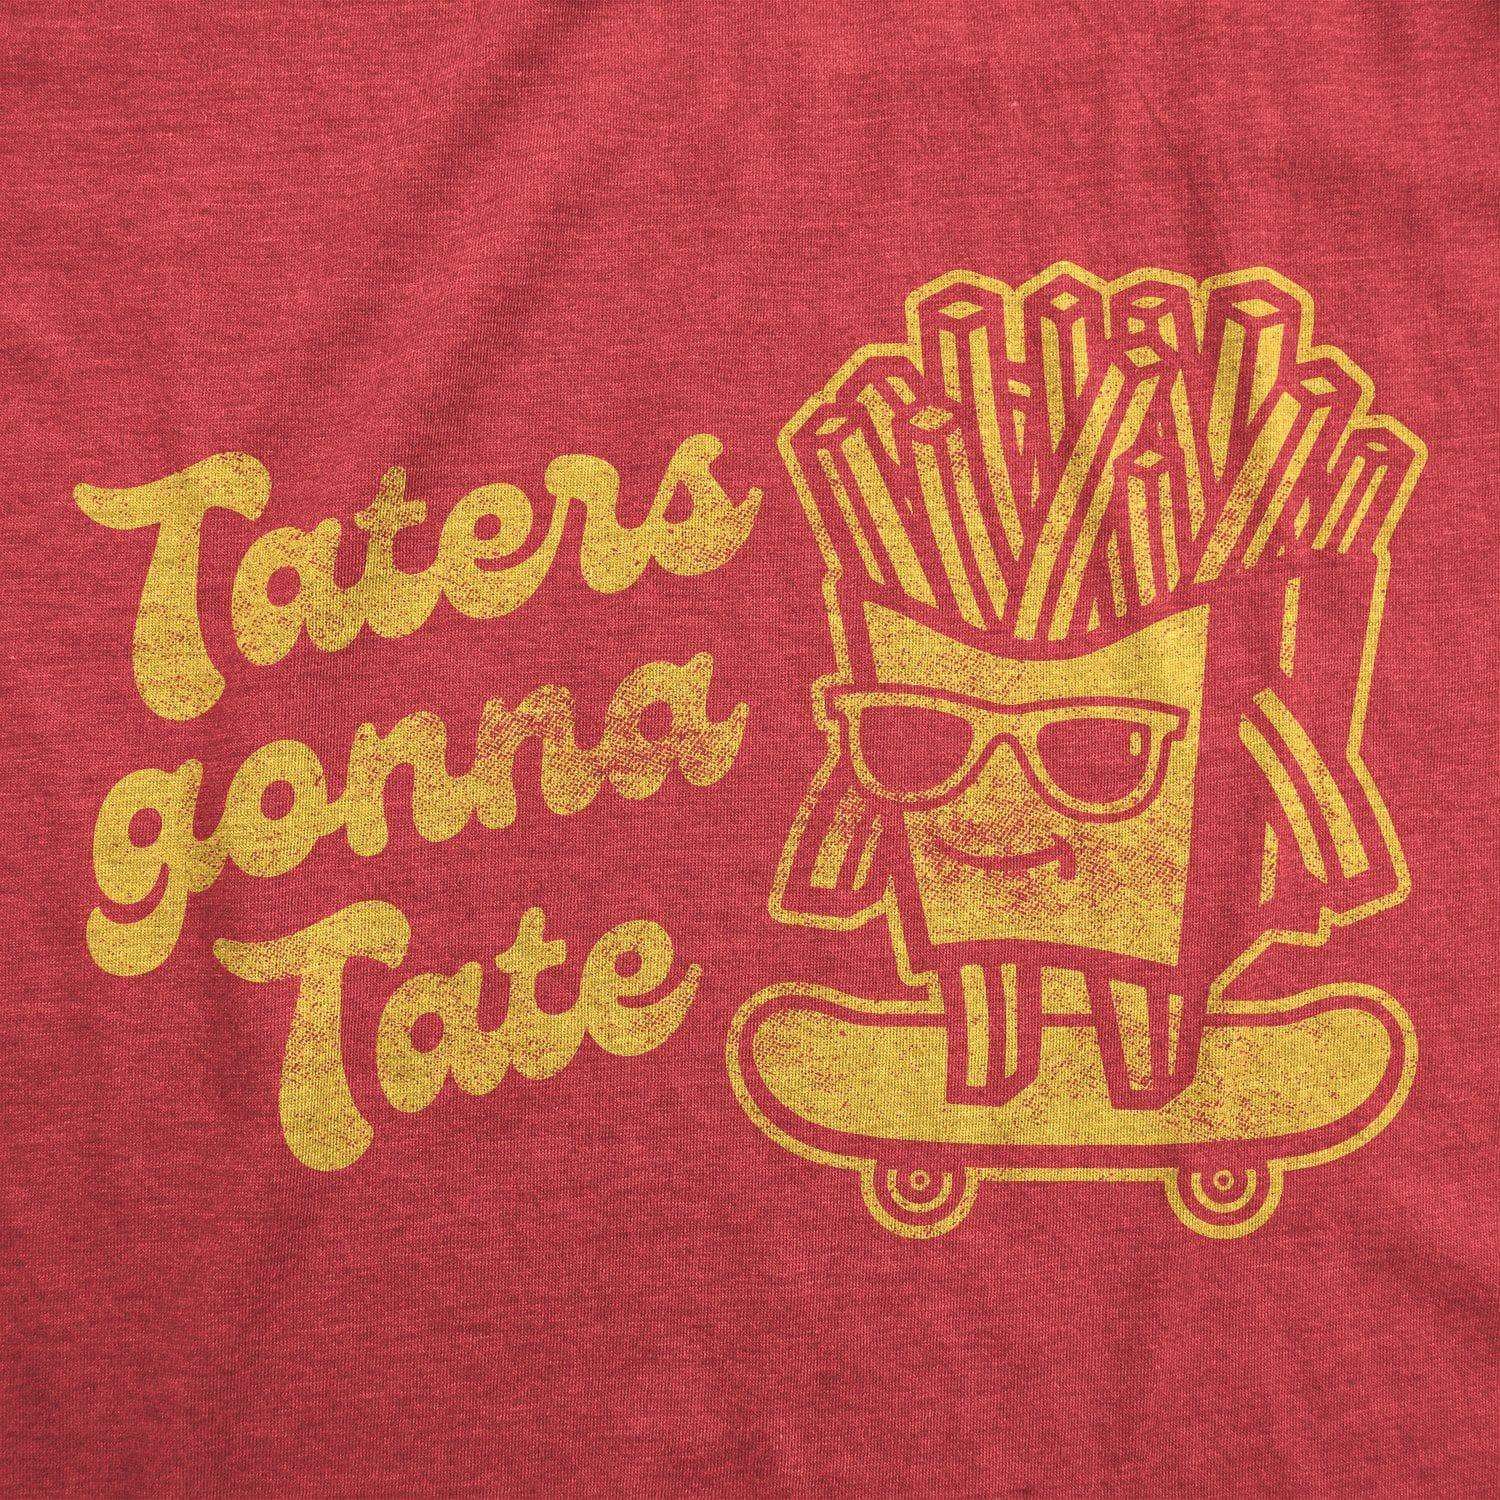 Taters Gonna Tate Men's Tshirt - Crazy Dog T-Shirts